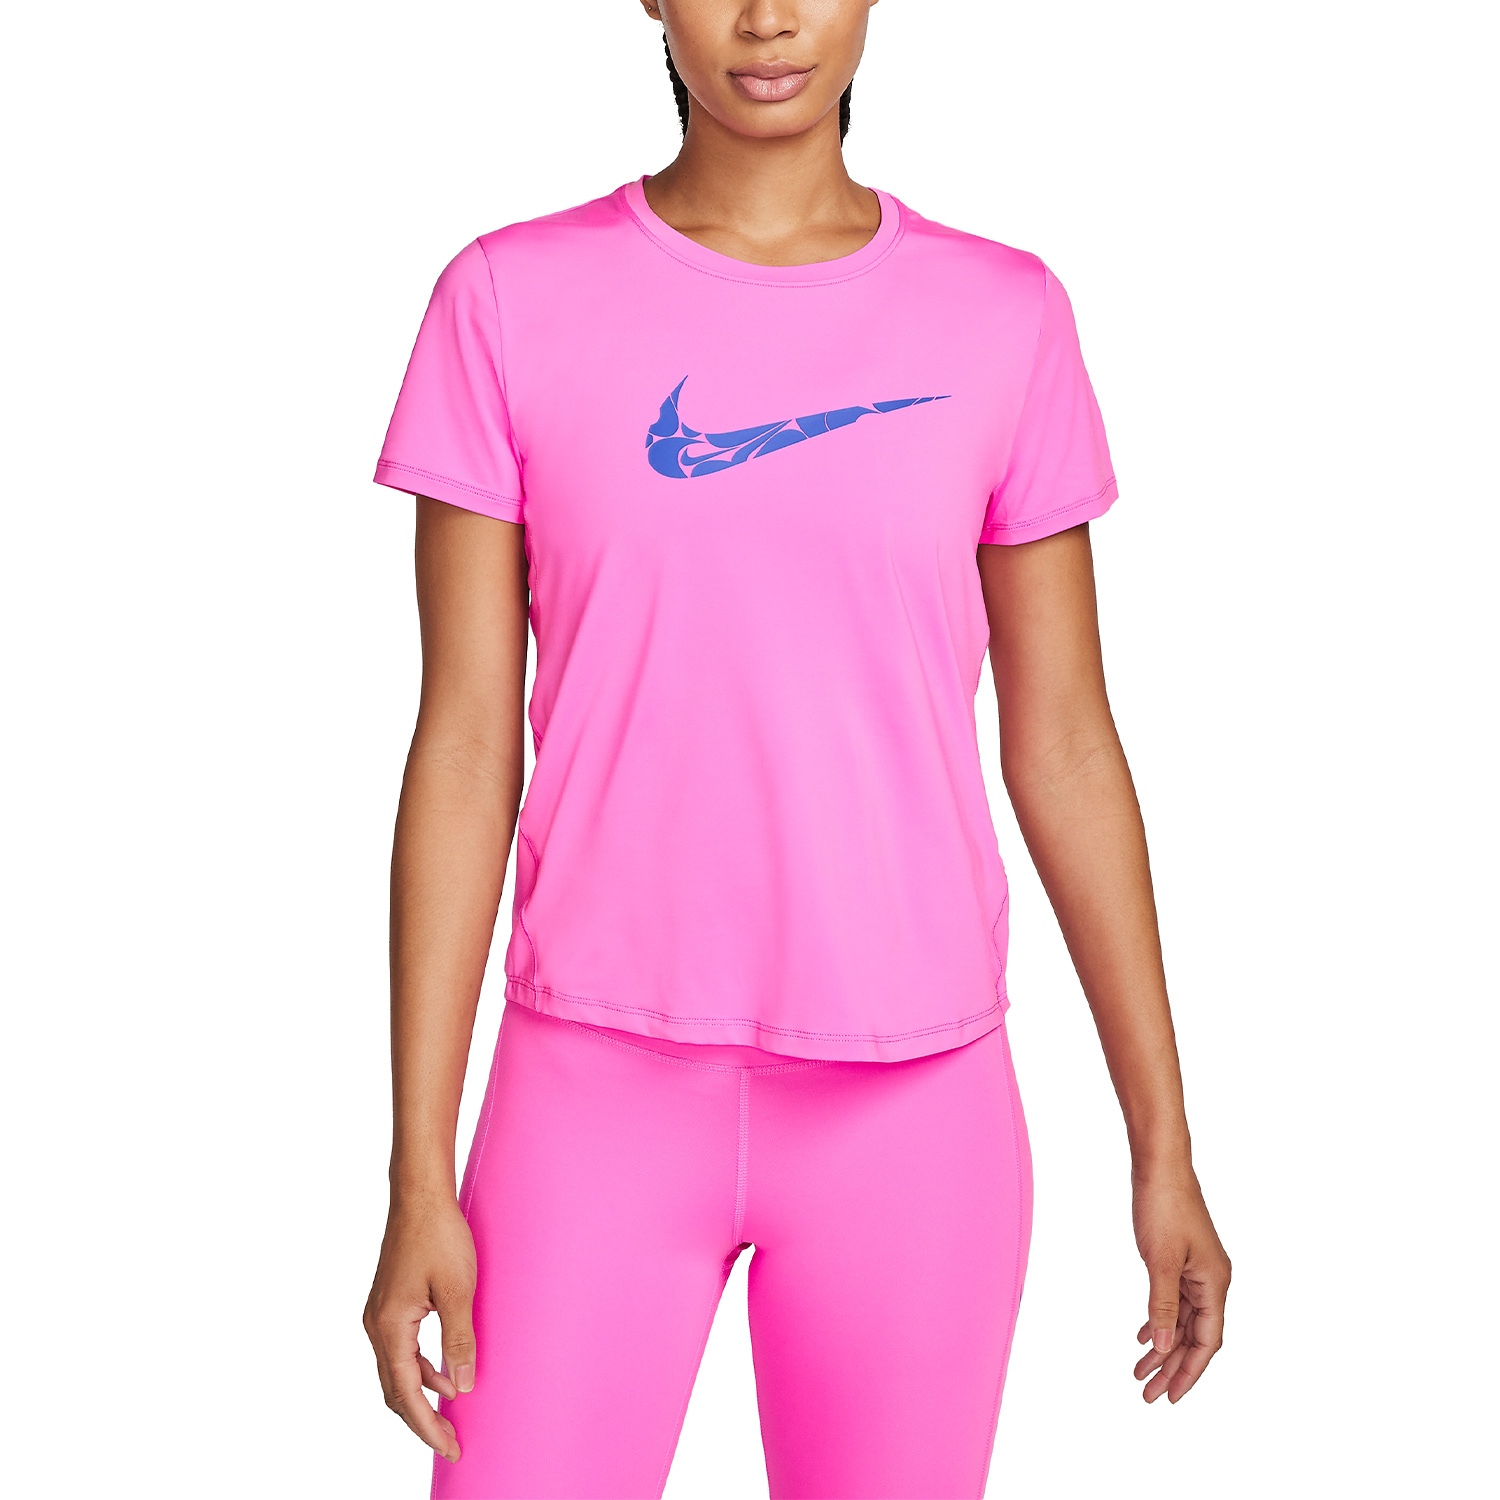 Nike One Swoosh T-Shirt - Playful Pink/Hyper Royal